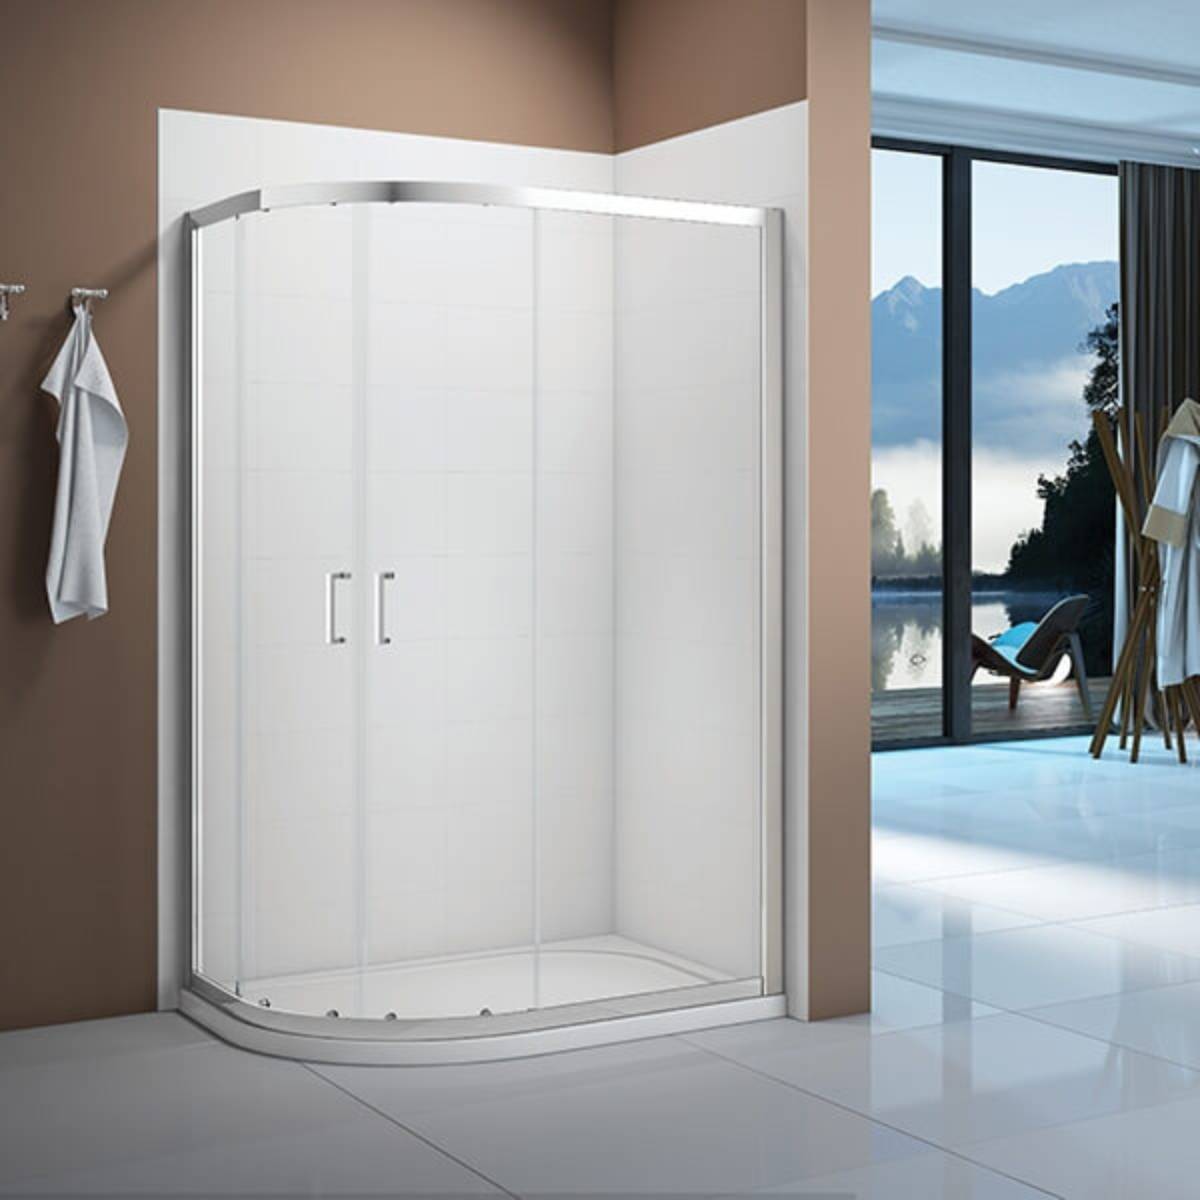 Merlyn Vivid Boost 900 x 800mm Offset Quadrant Shower Enclosure (10104)